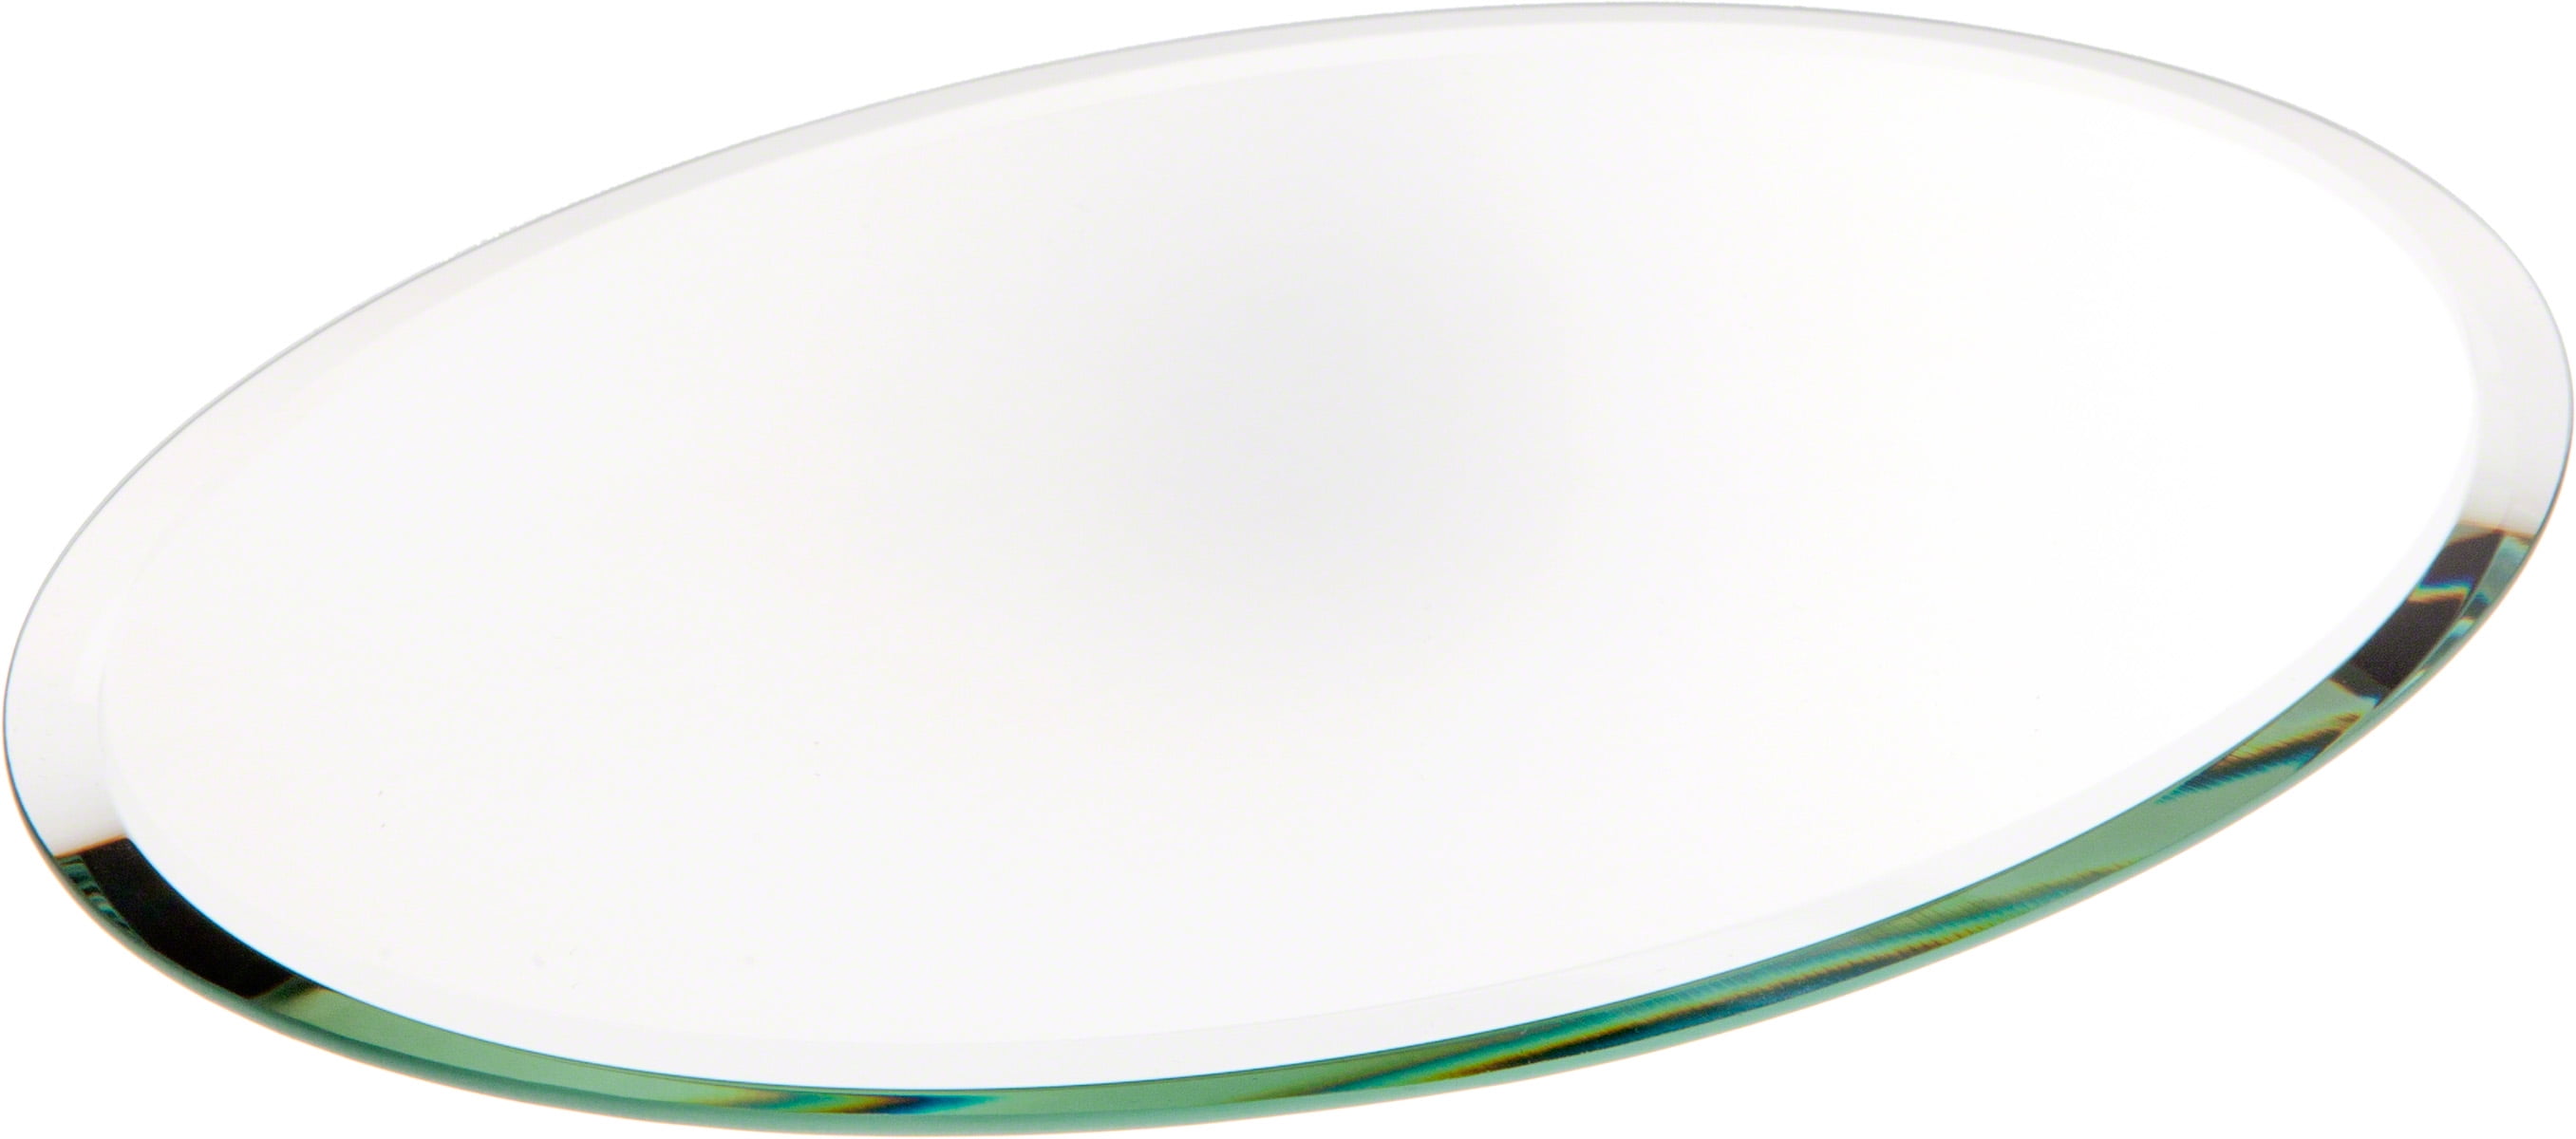 Plymor Oval 3mm Beveled Glass Mirror 5 inch x 7 inch 